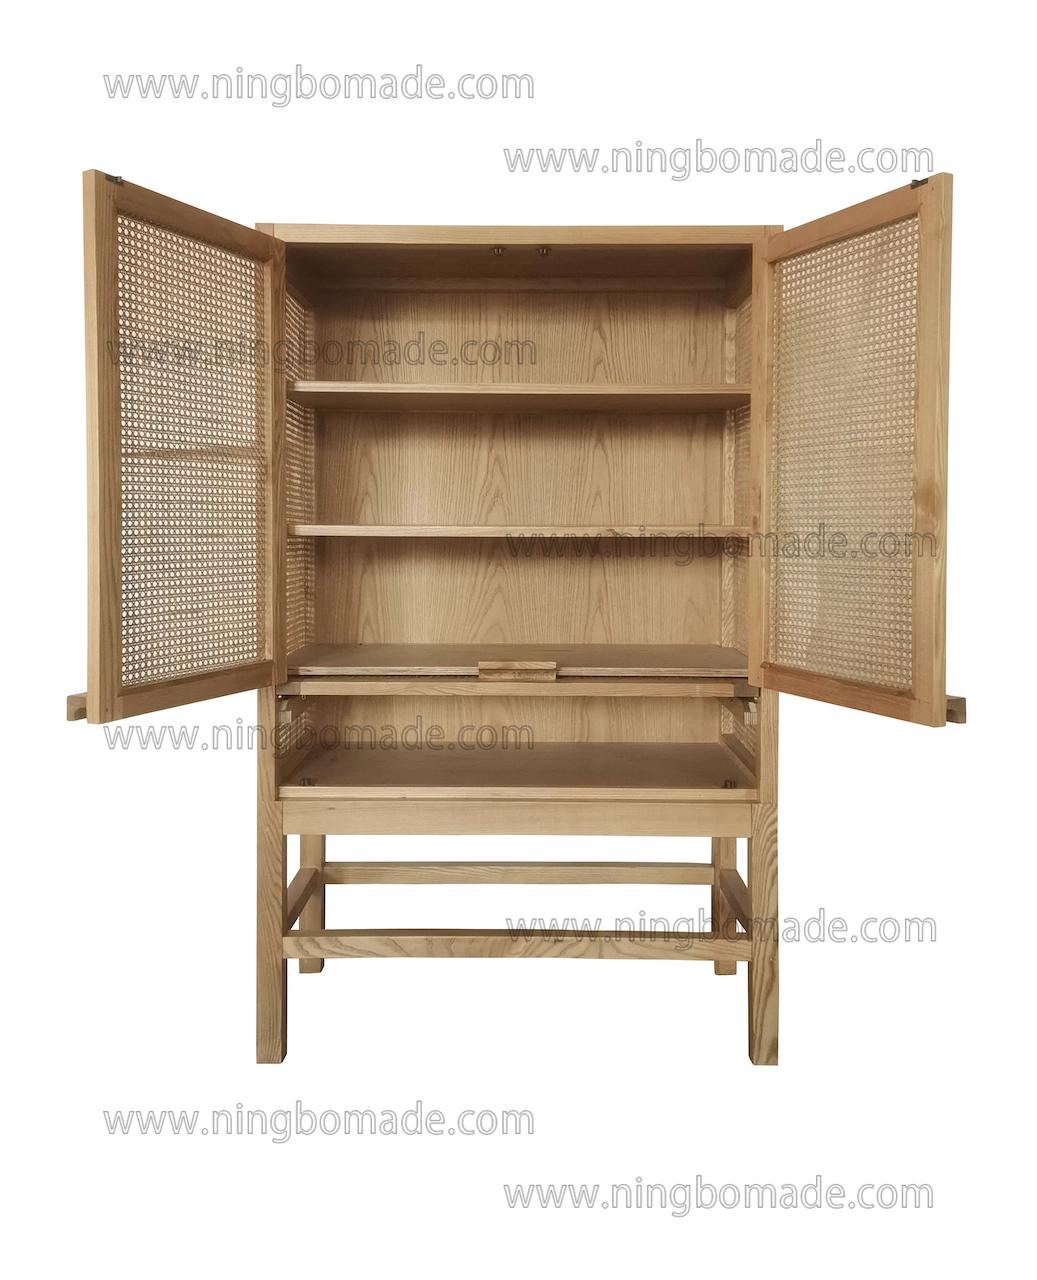 Elegant Rattan Upholstery Furniture Nature Ash Rattan Storage Cabinet